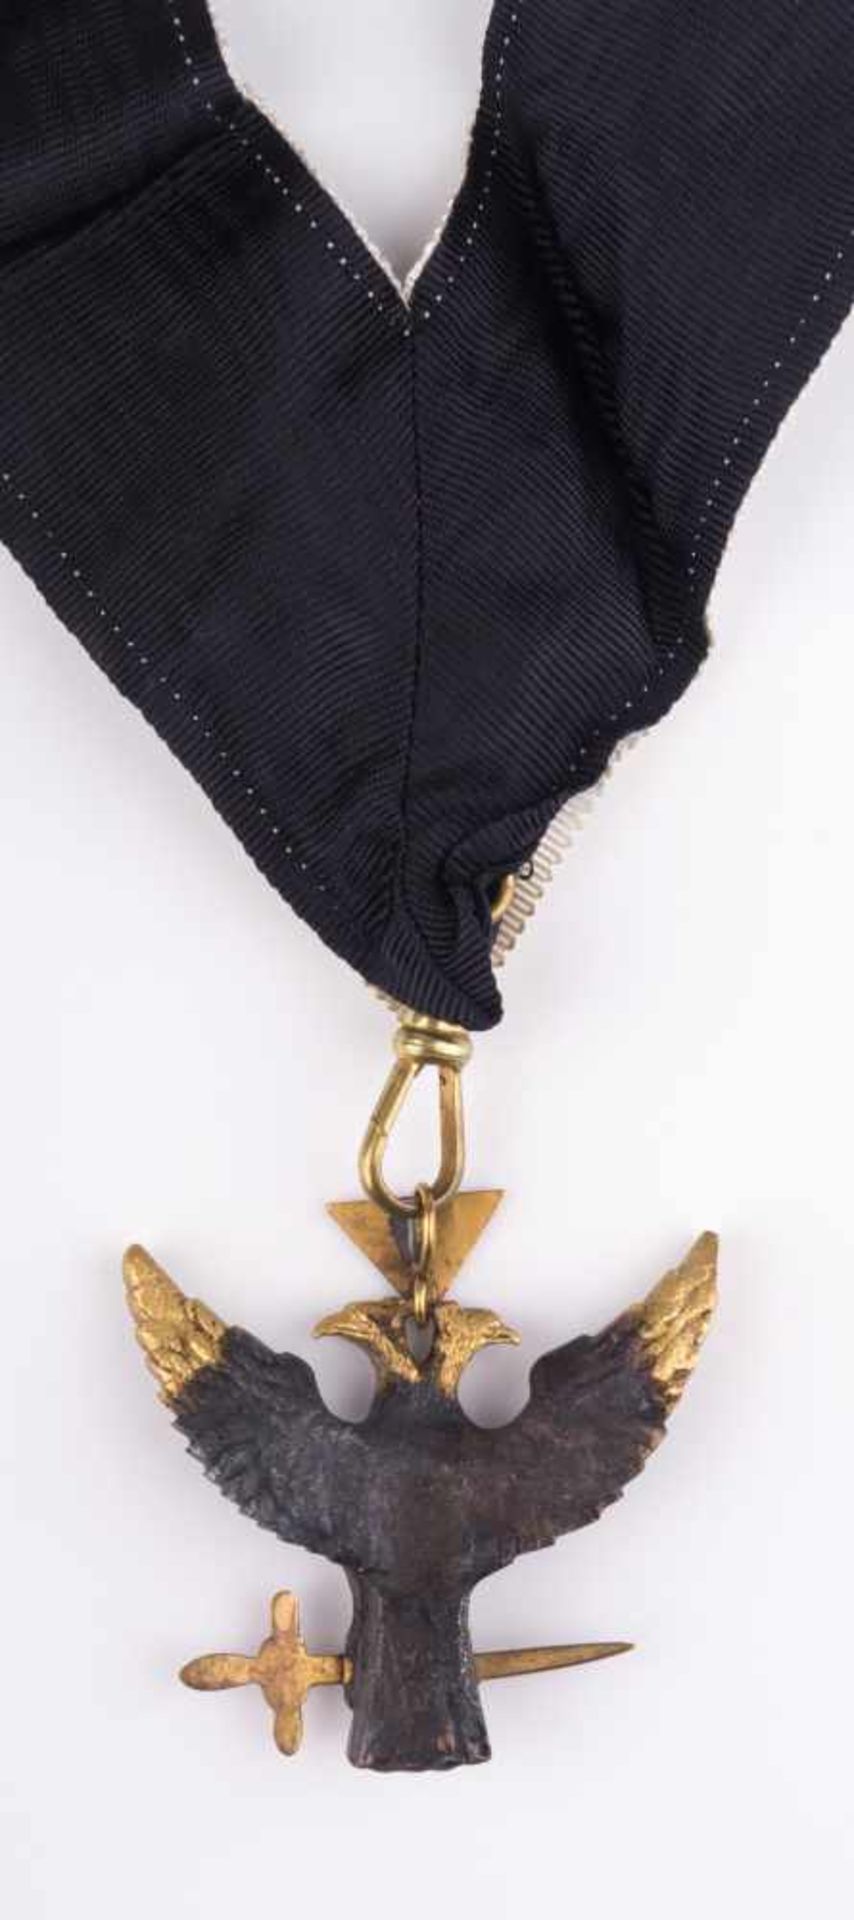 Freimaurer Orden/Anhänger / Freemason medal/pendant Doppelkopfadler am schwarzen Trageband - Bild 5 aus 5